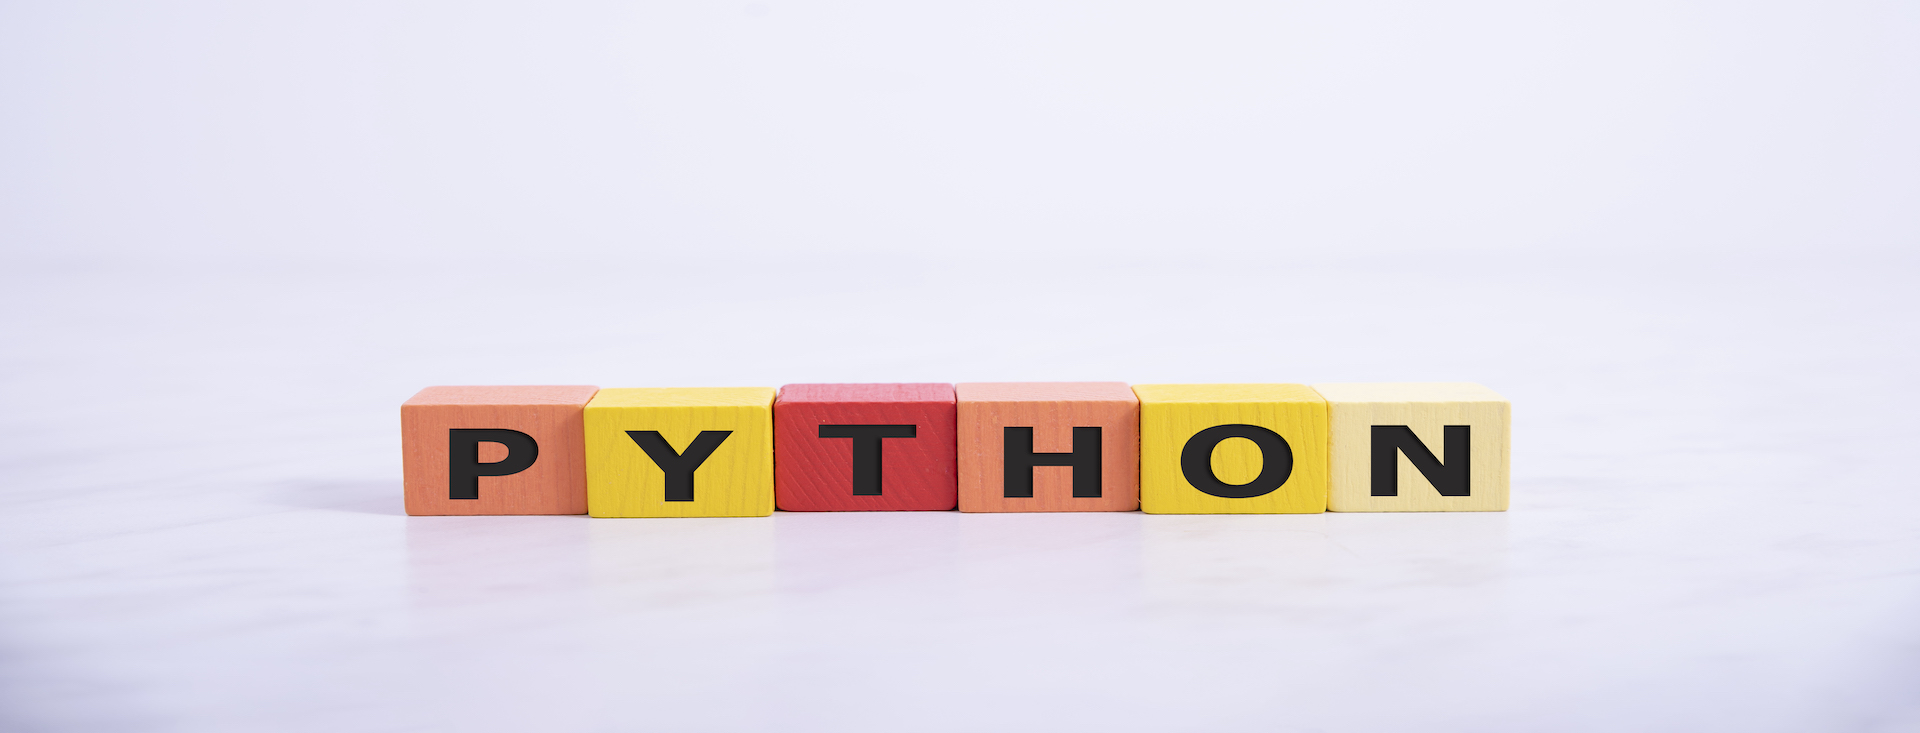 Python app development frameworks